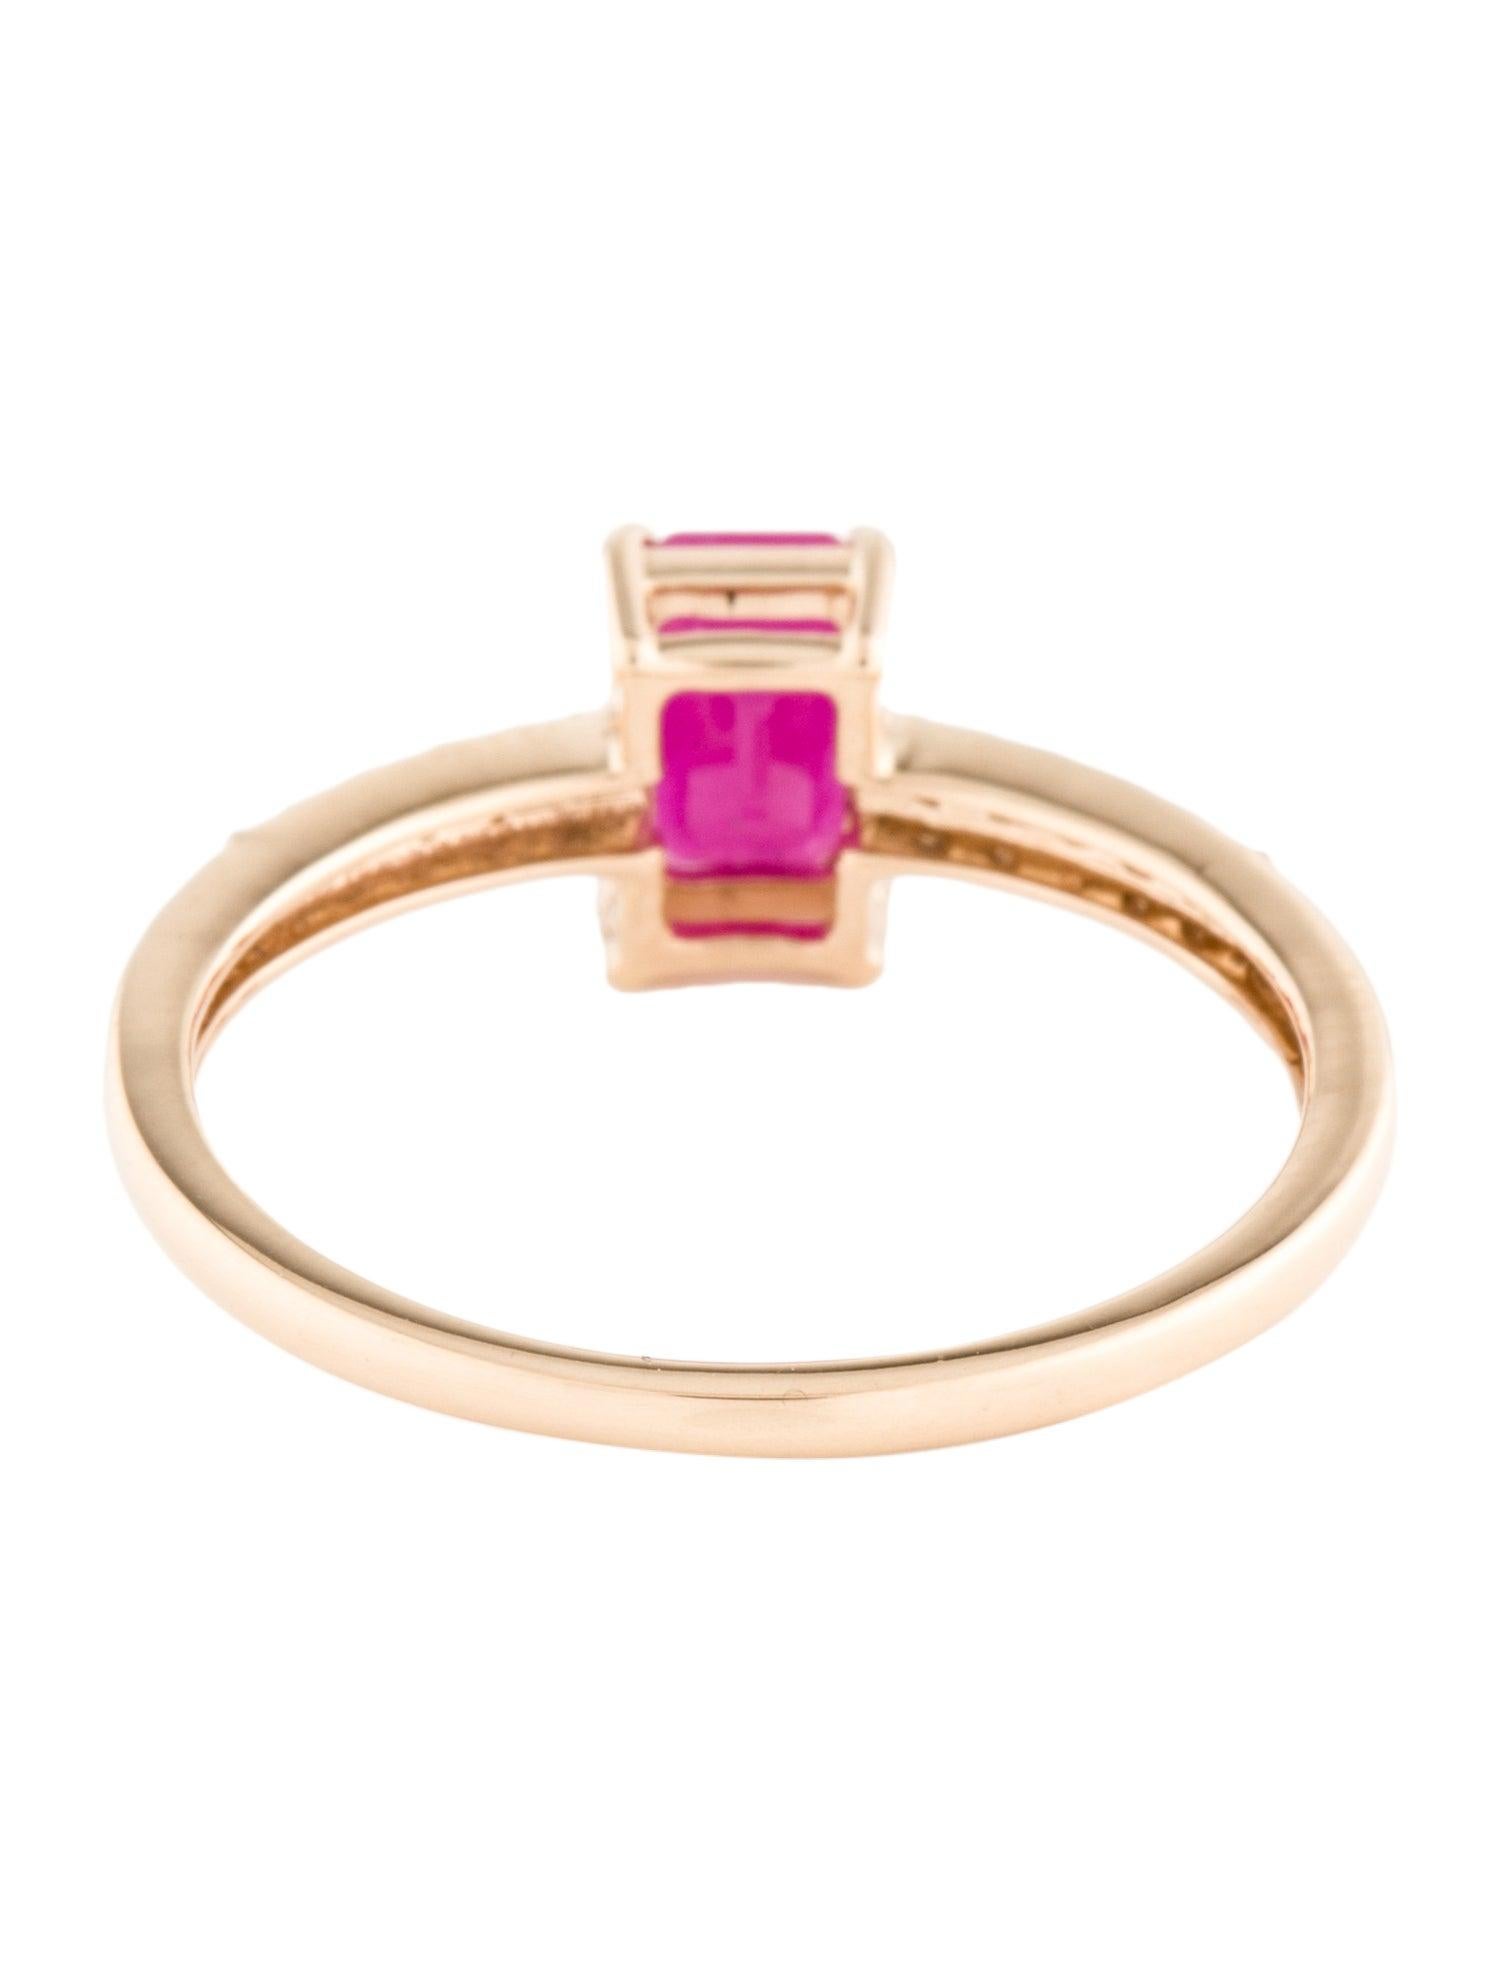 Brilliant Cut Dazzling 14K Ruby & Diamond Cocktail Ring - Size 8.75 - Fine Statement Jewelry